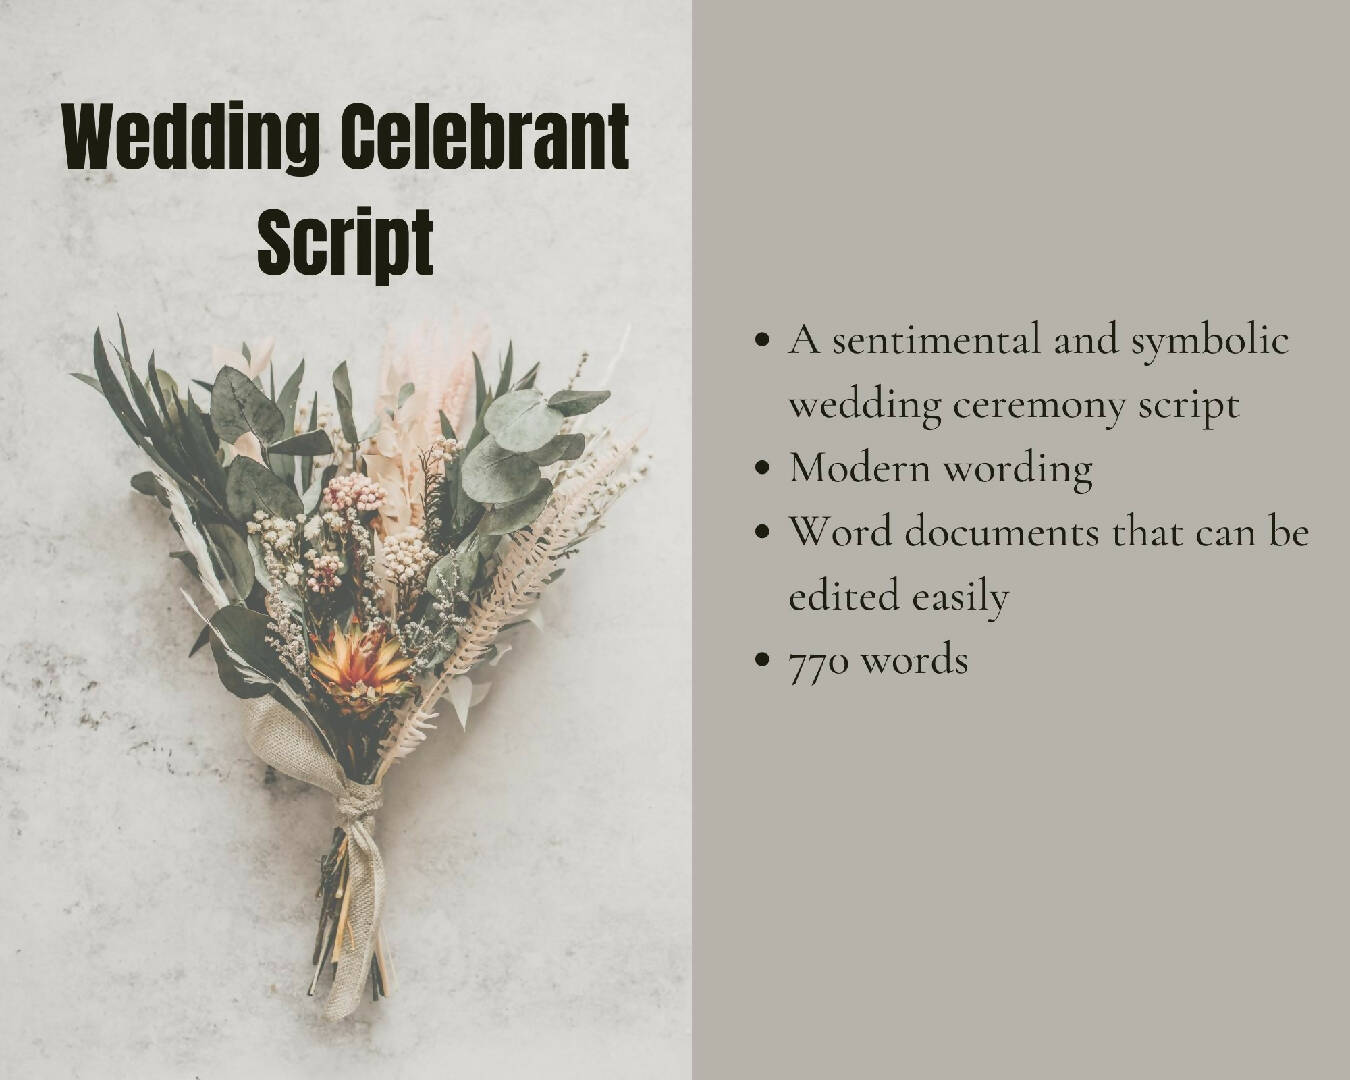 Wedding Celebrant Script, Wedding Officiant Speech, Ceremony Script For Wedding Celebrants, Wedding Vows, Celebrant Resources